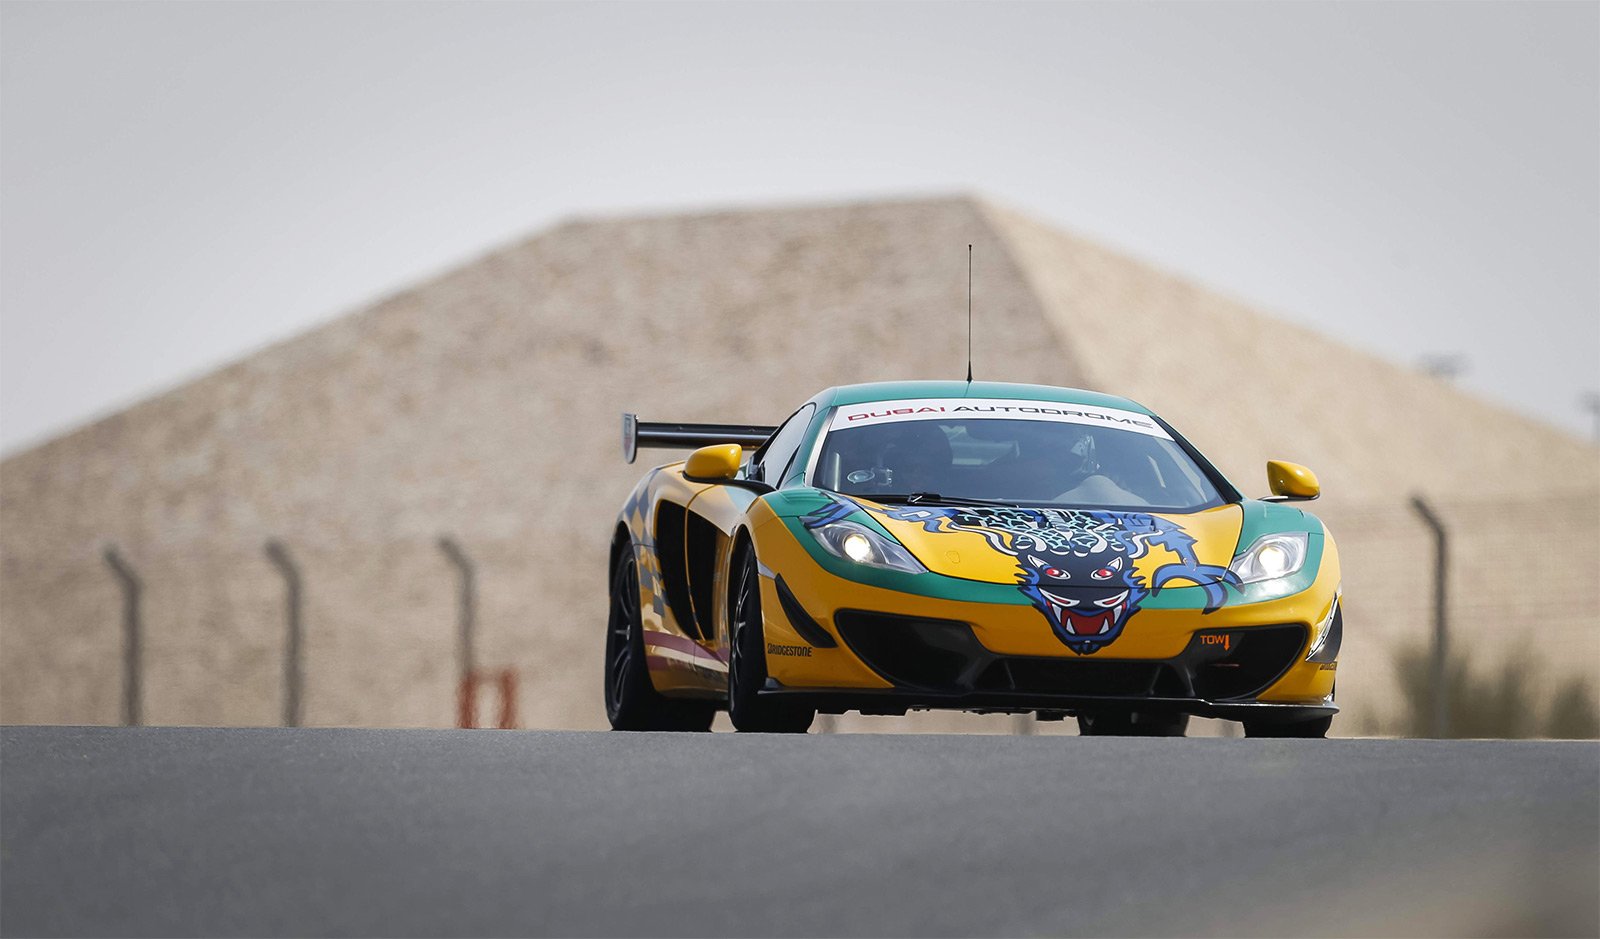 How to drive a thoroughbred McLaren Racing Machine in Dubai